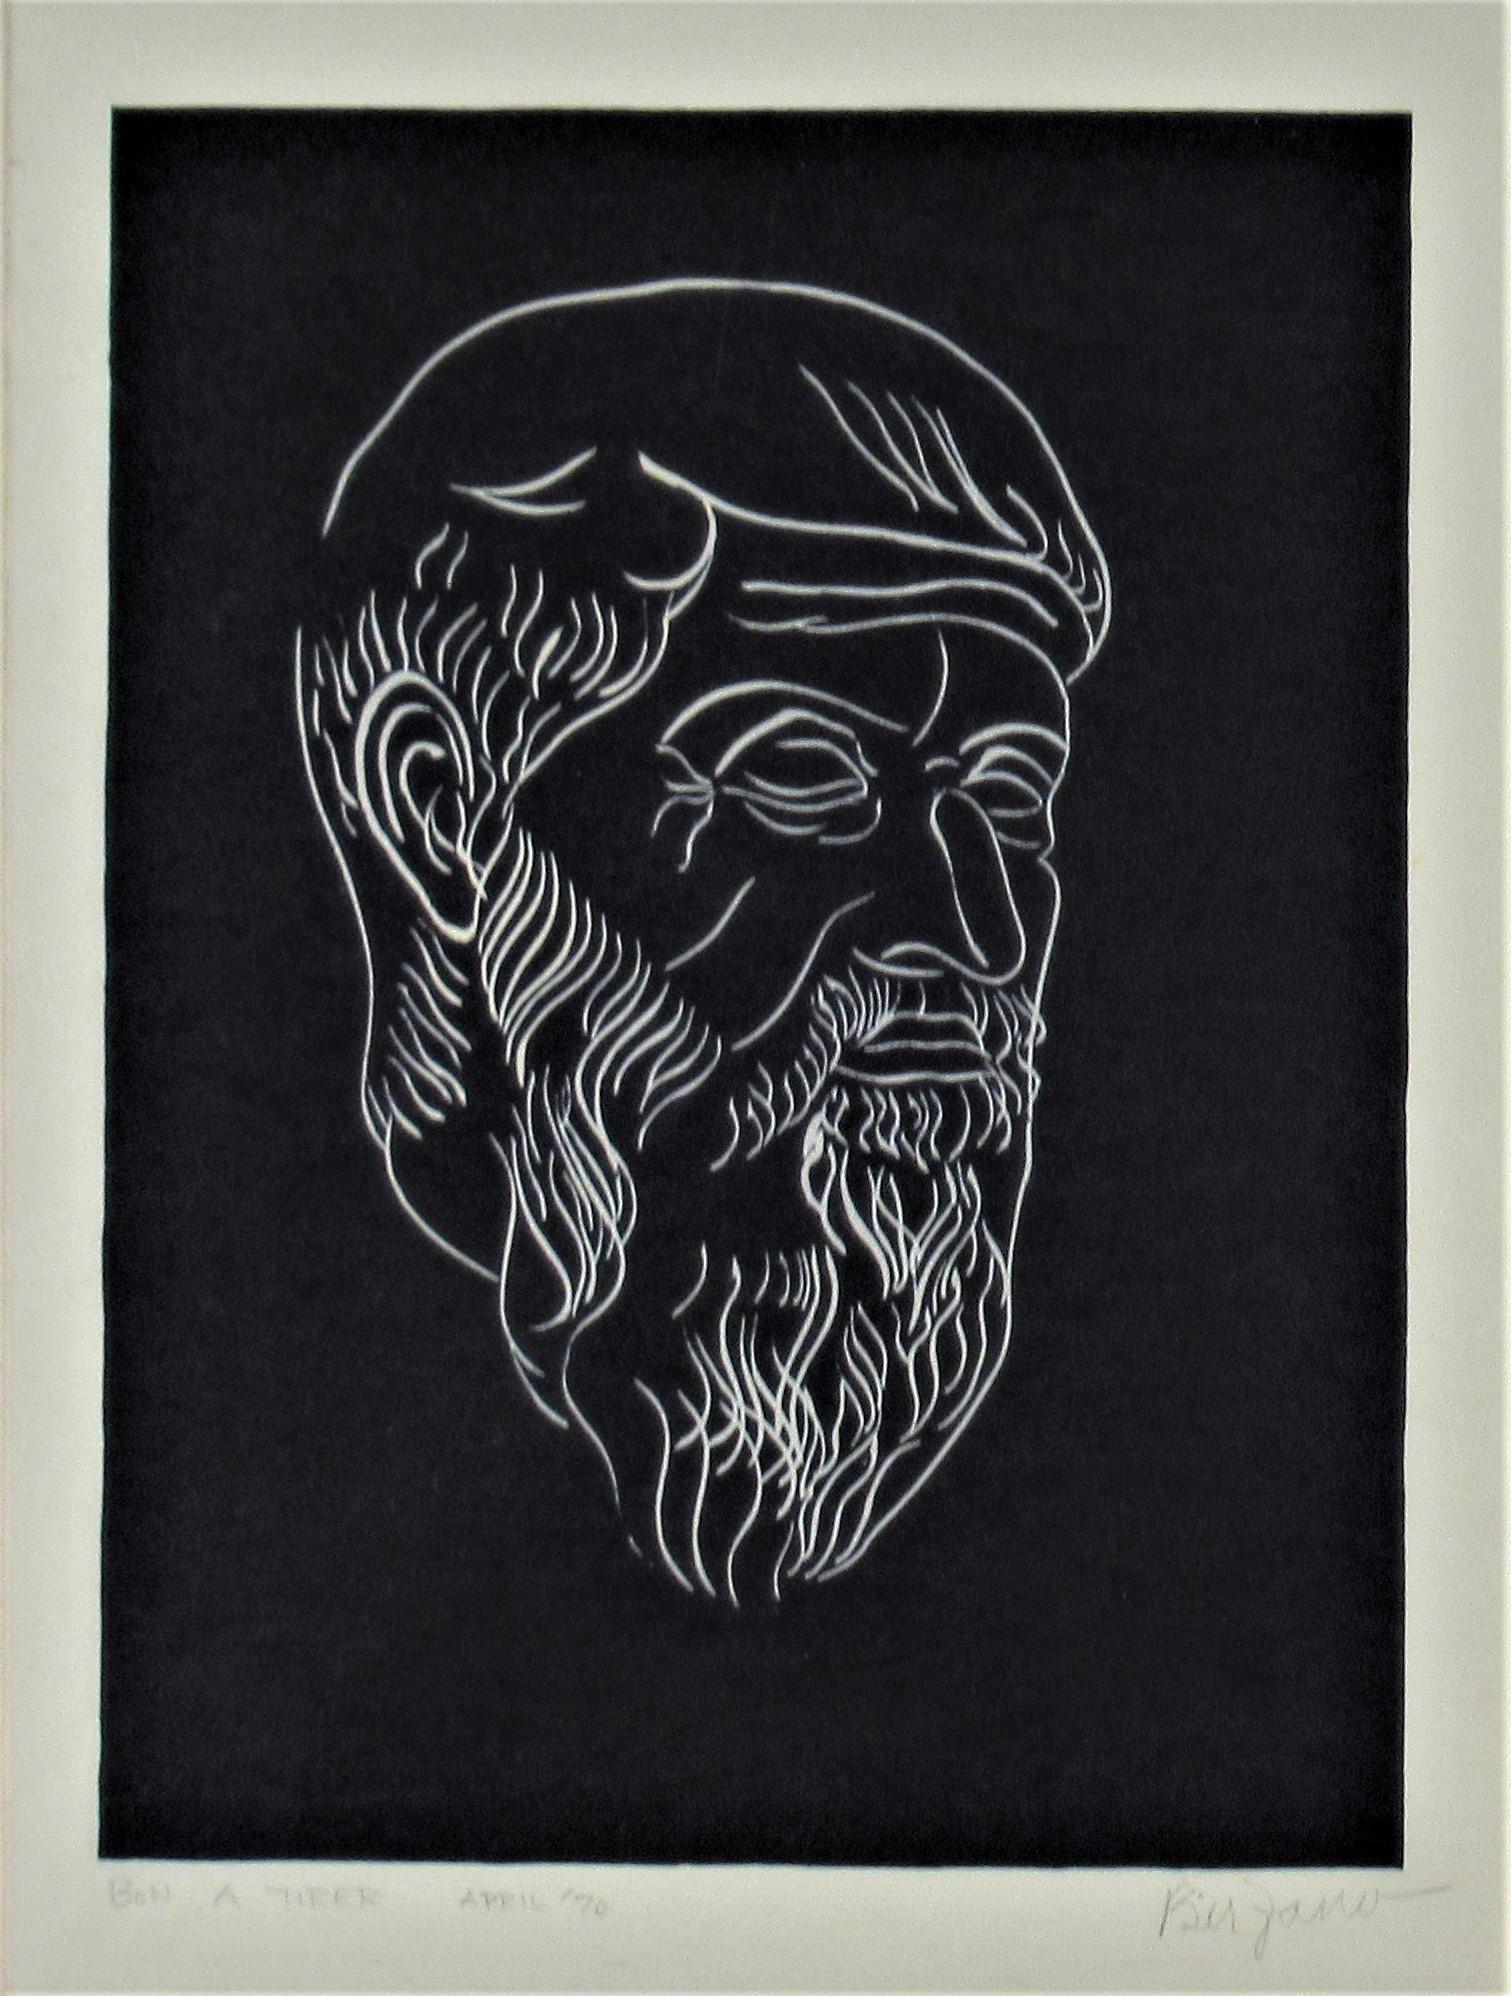 Plato - Print by Beniamino Bufano